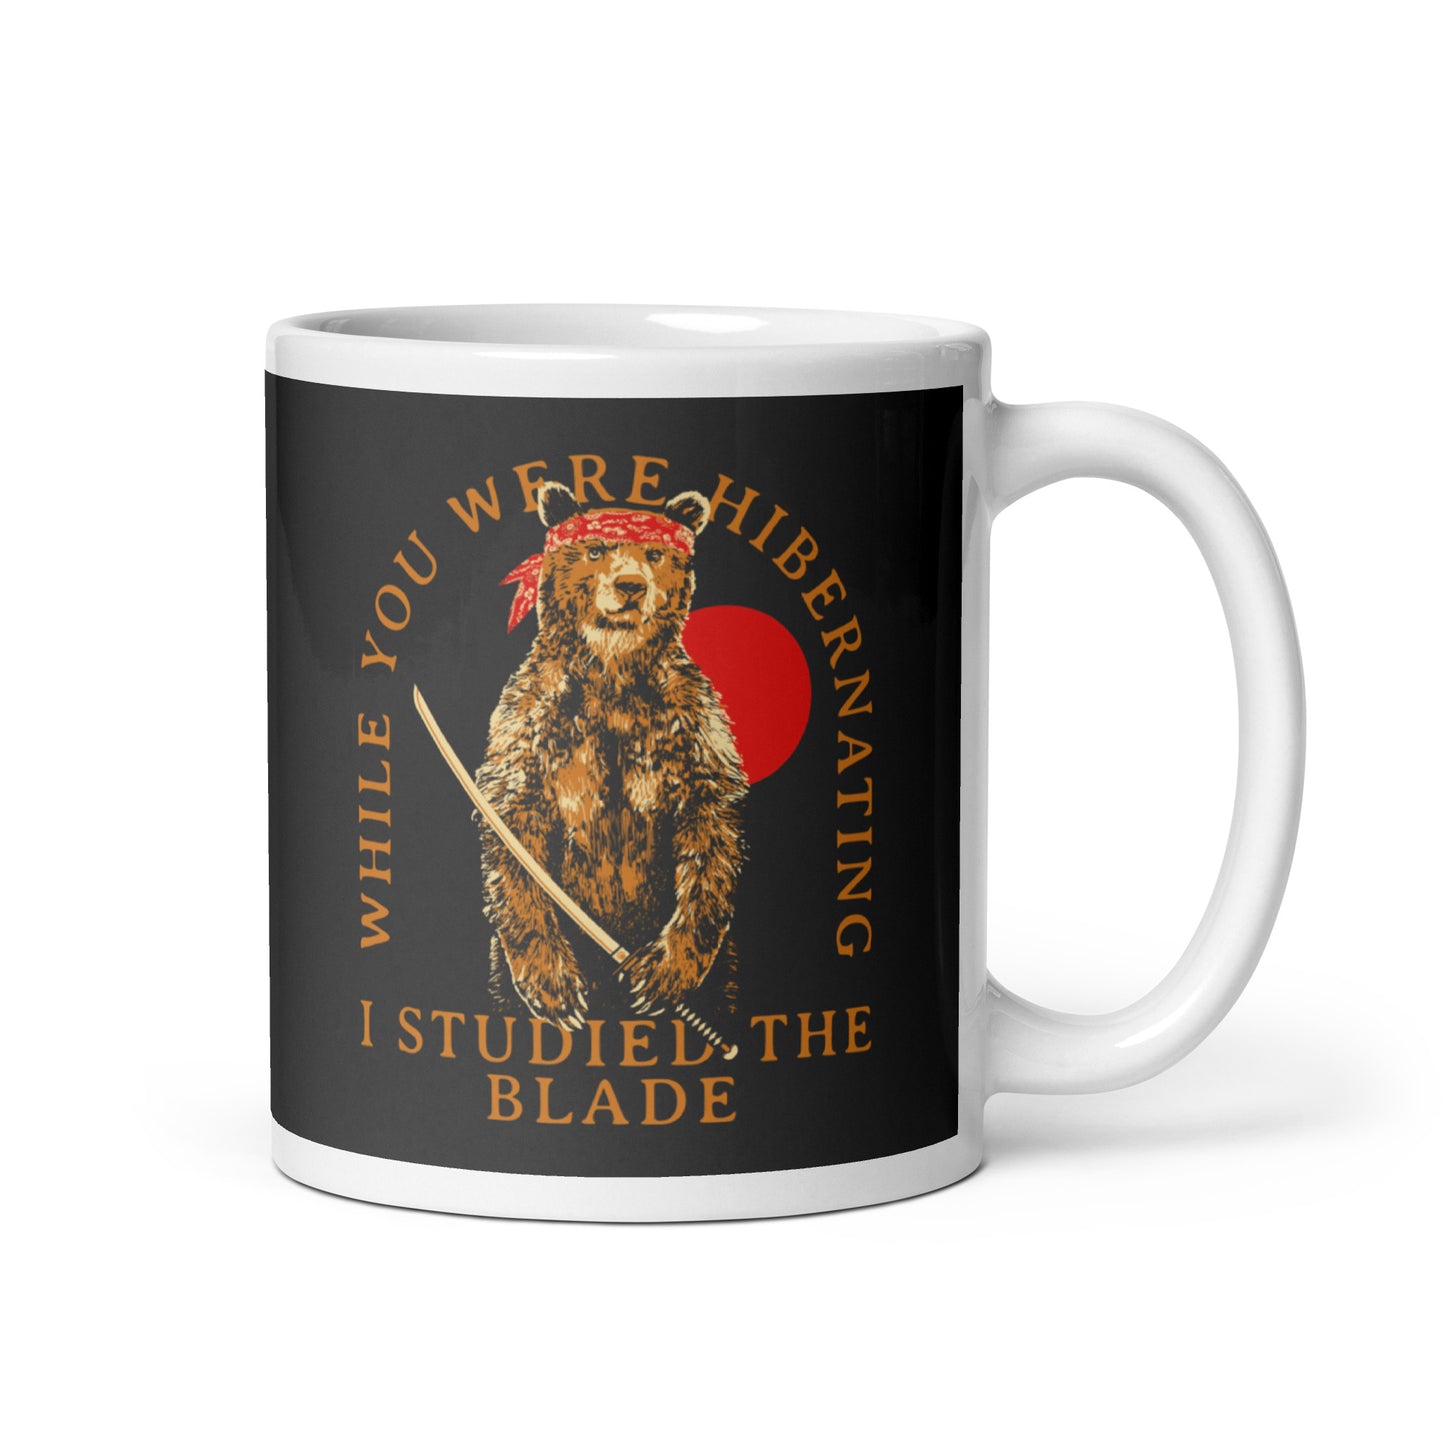 I Studied The Blade Mug